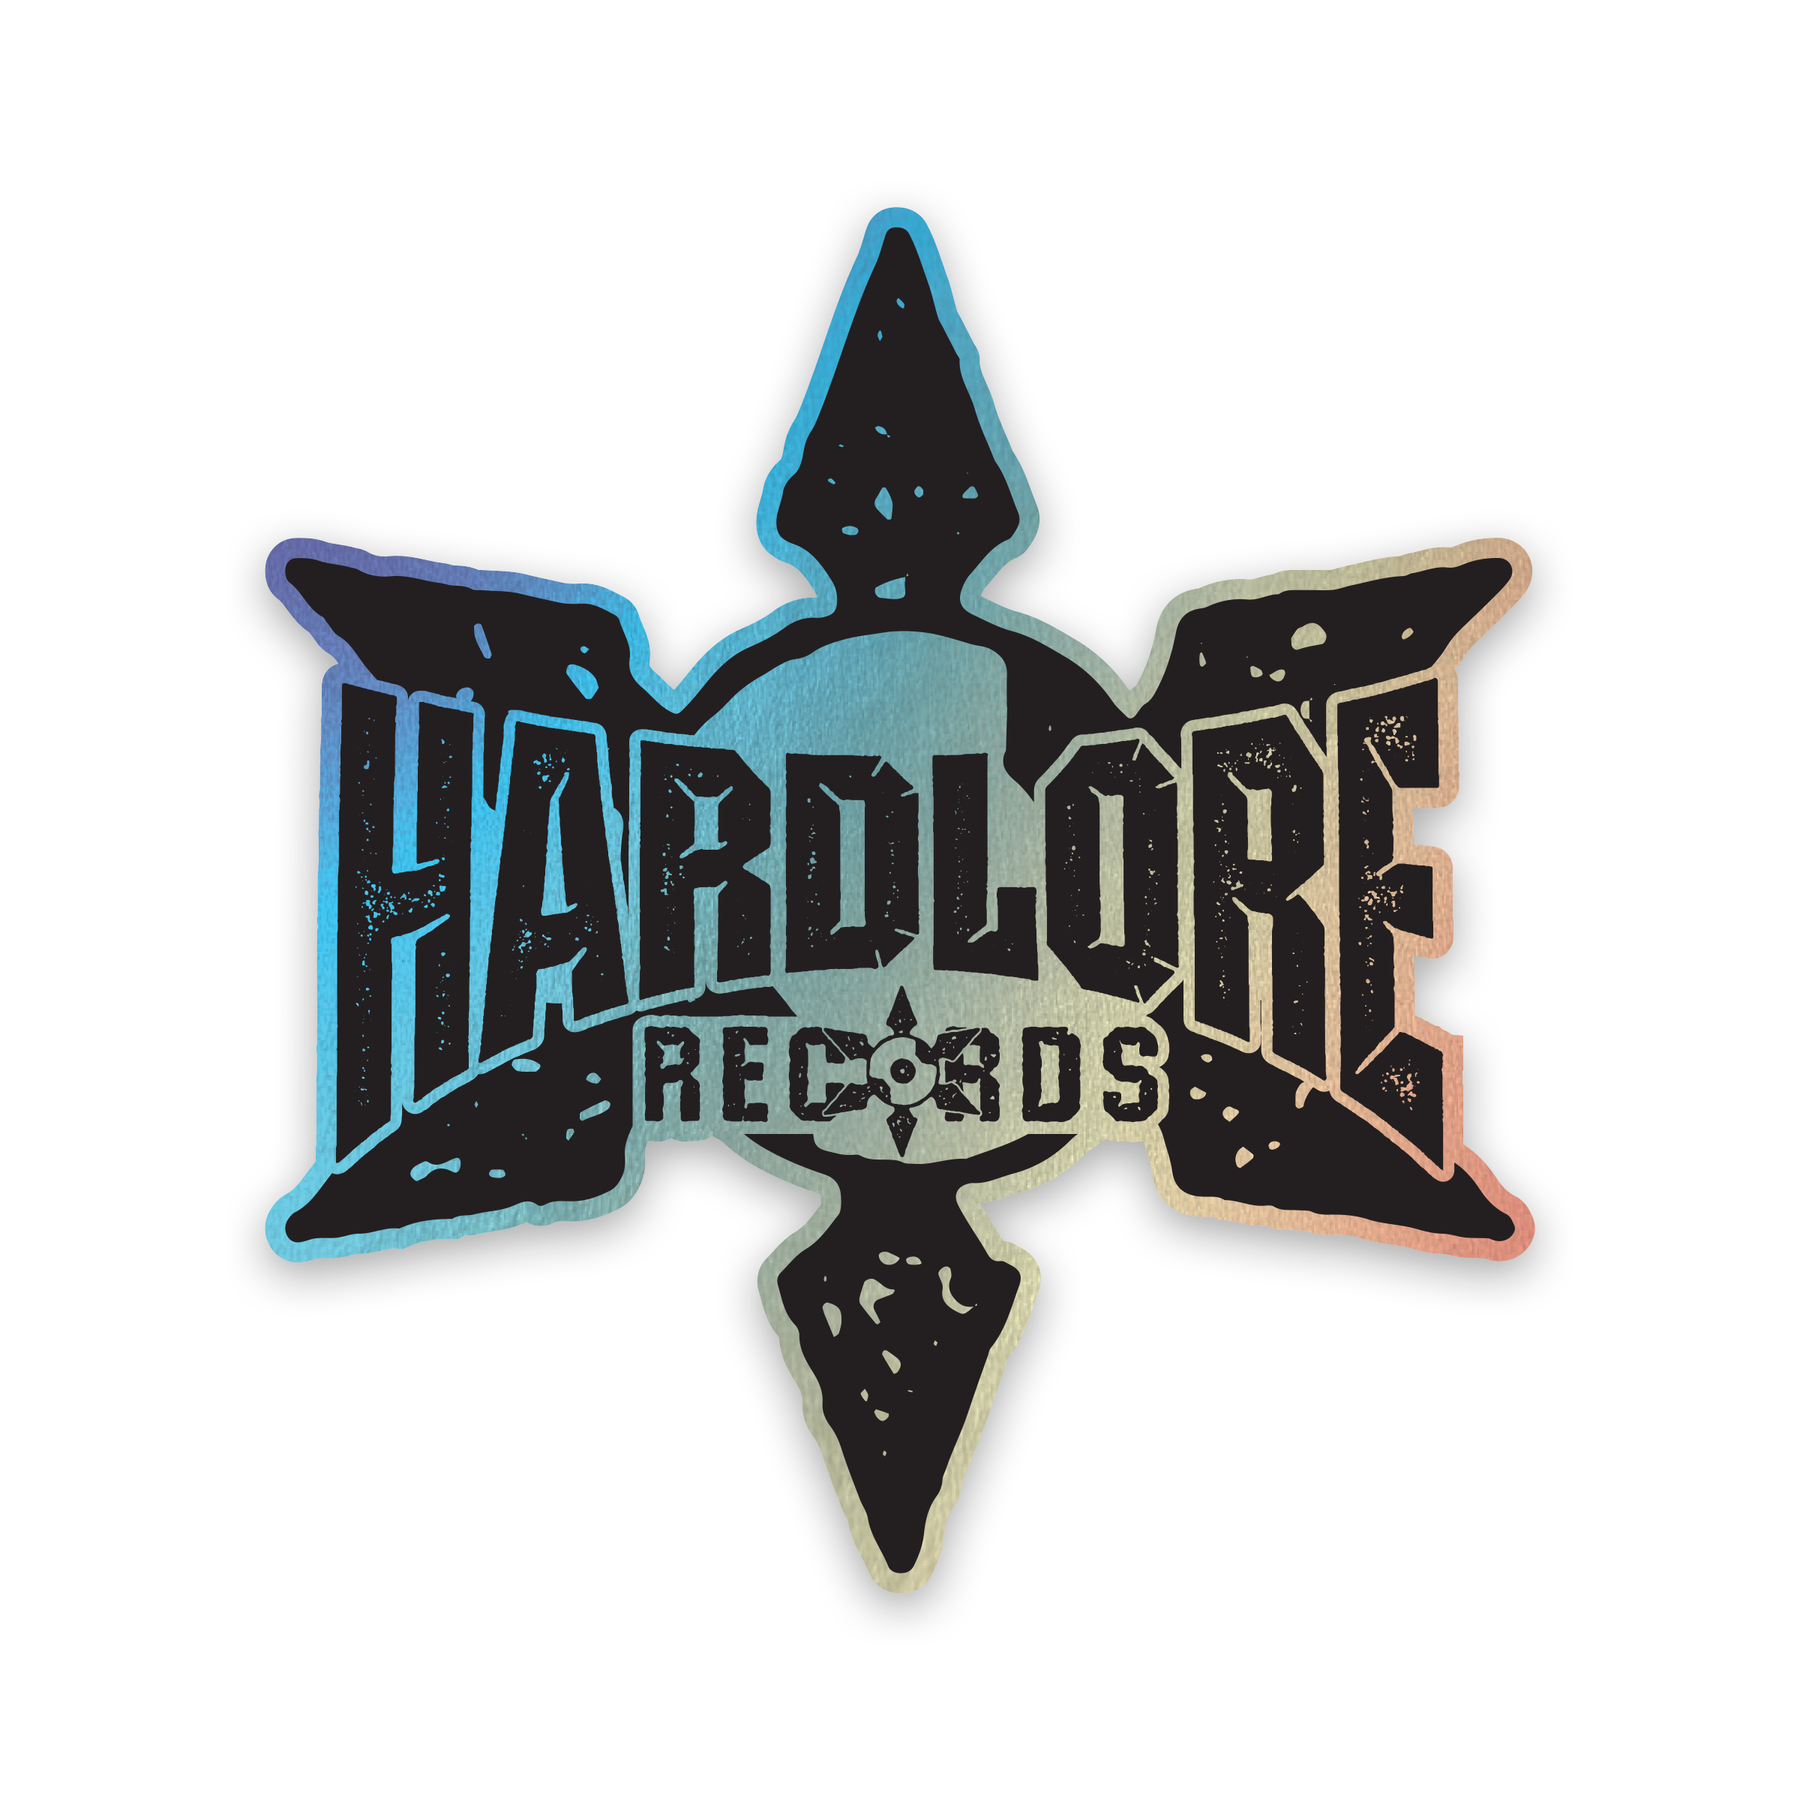 Hardlore Records Hologram Sticker *PREORDER*